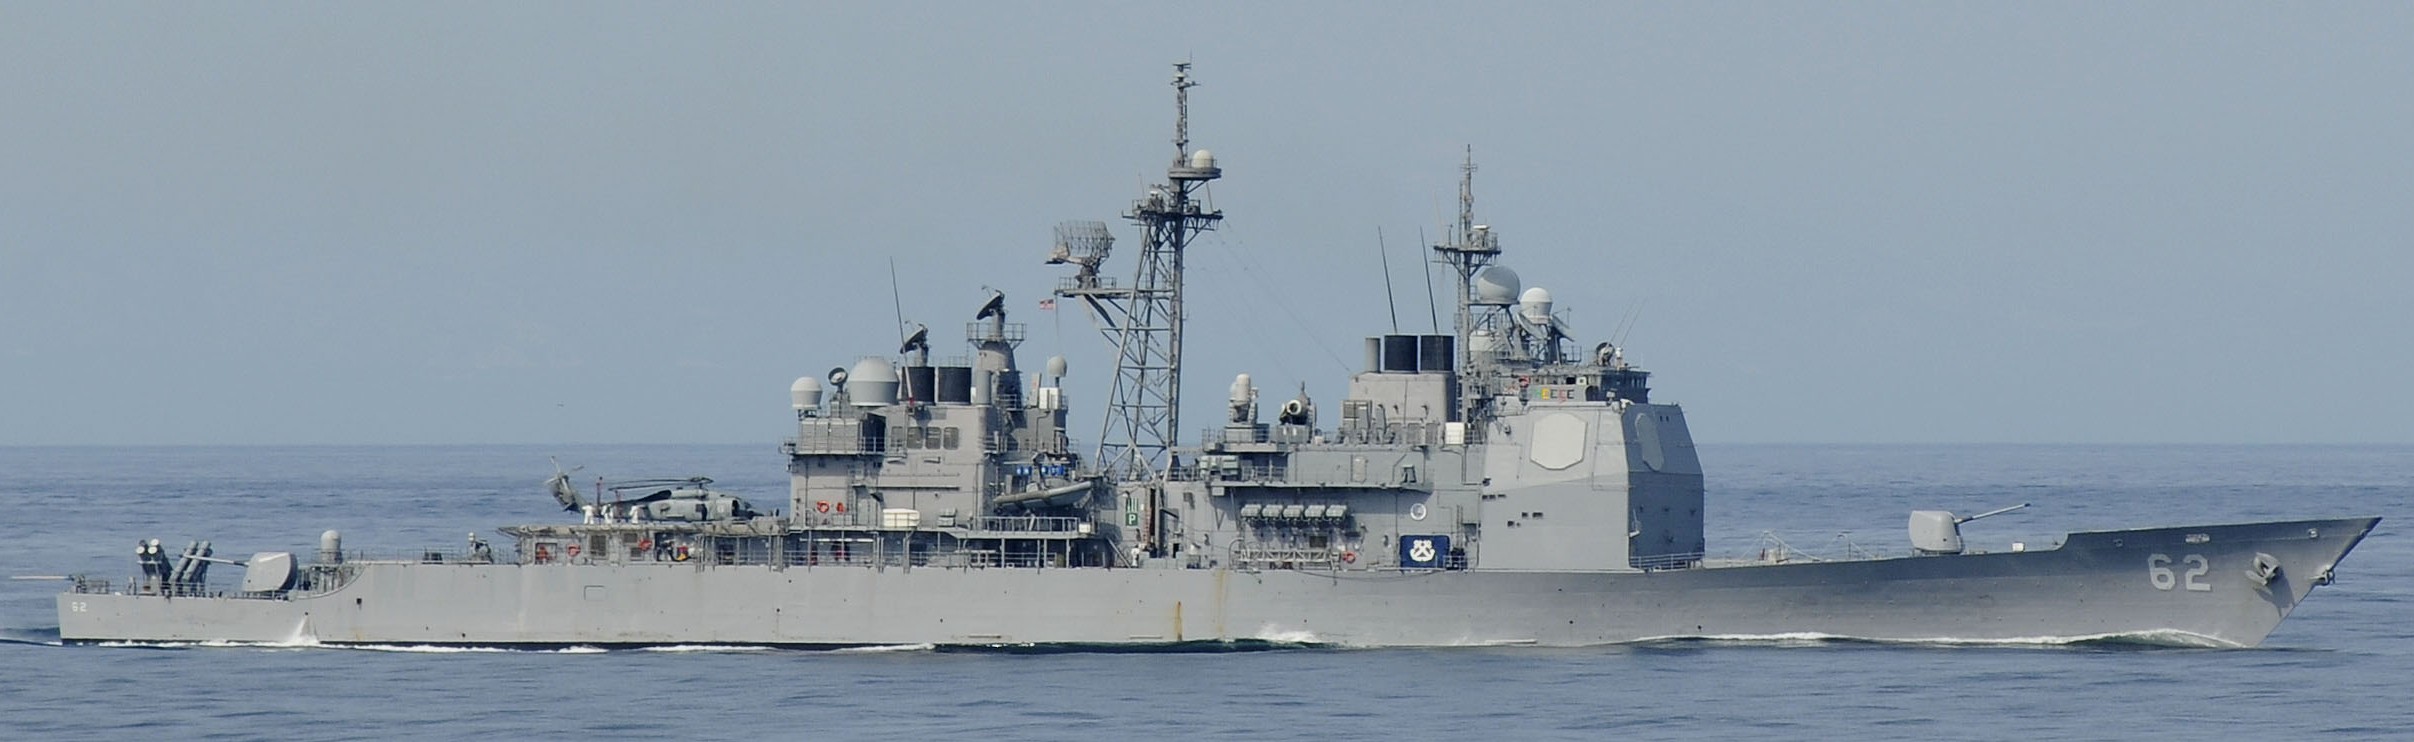 cg-62 uss chancellorsville ticonderoga class guided missile cruiser aegis us navy 26